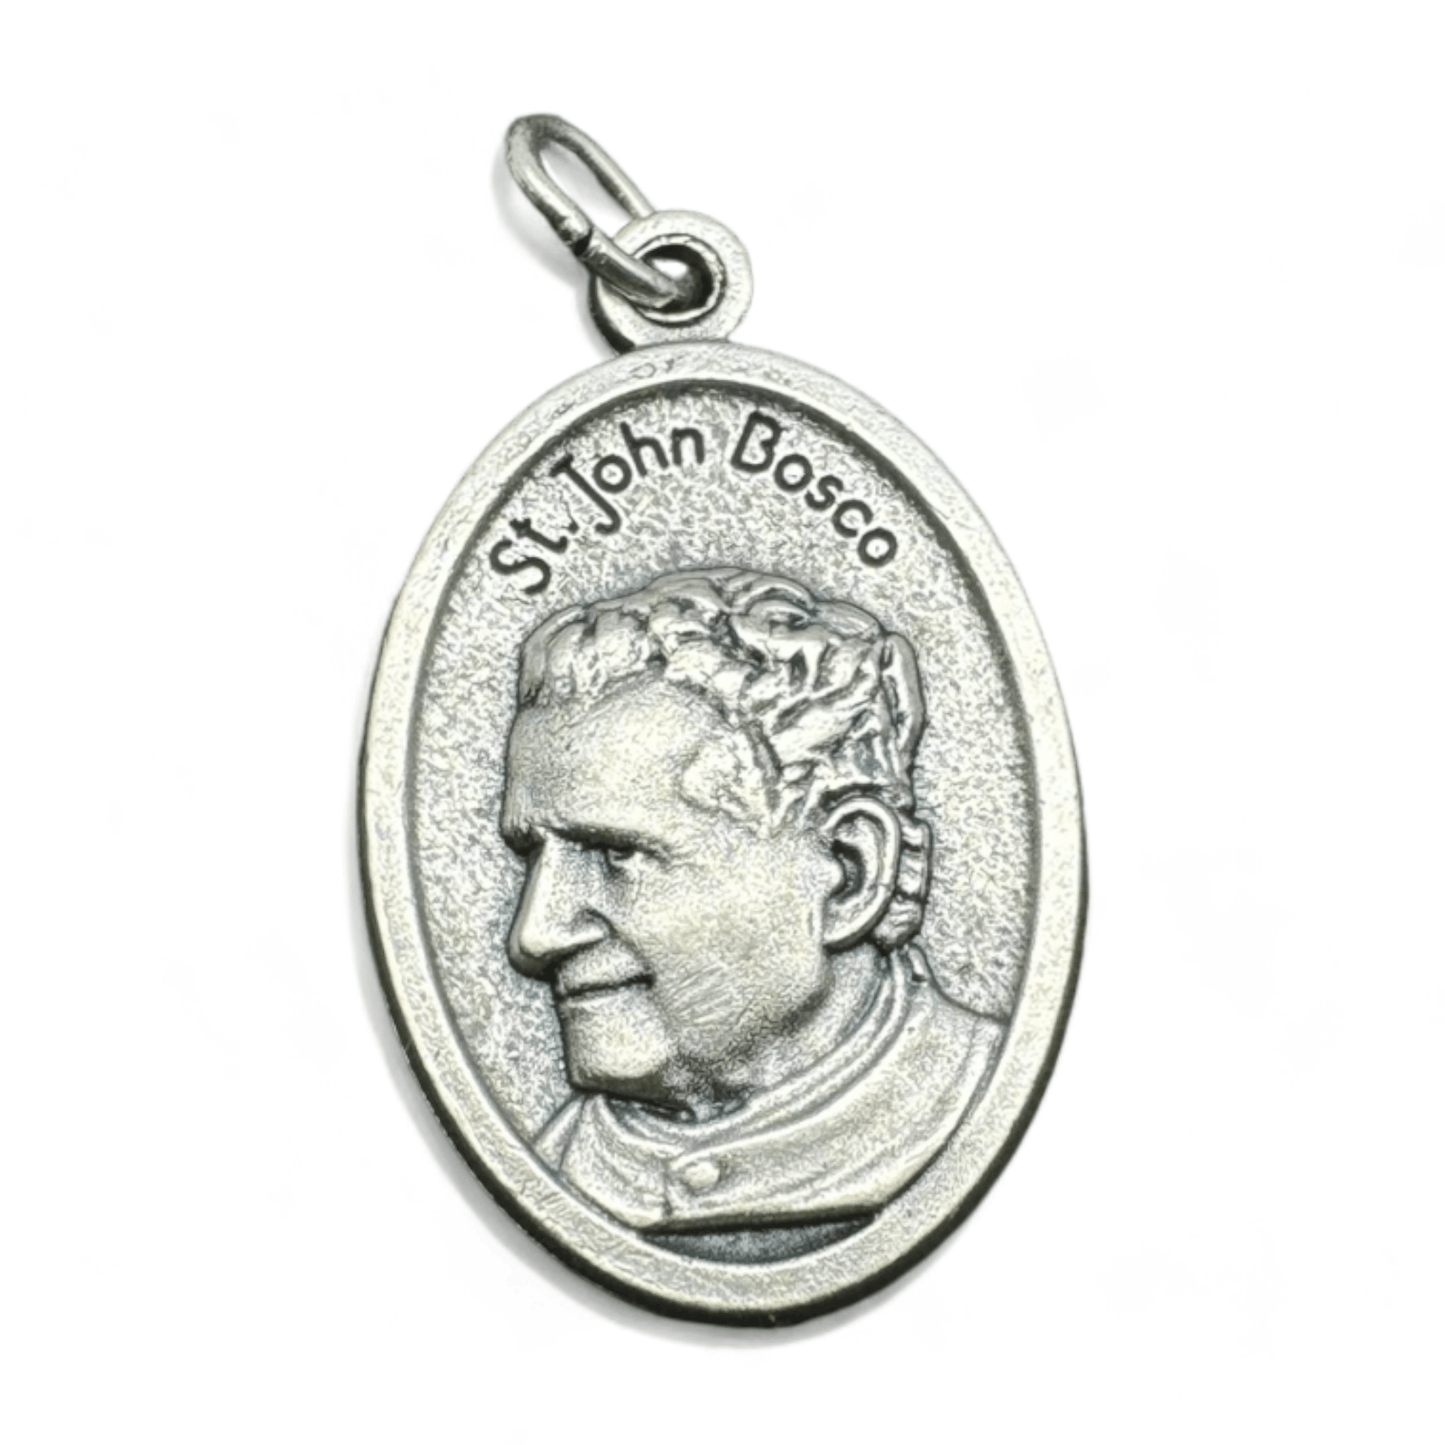 Catholically Medal St. John Bosco - Medal - Pendant - Charm - Salesian - Mary Help Of Christians